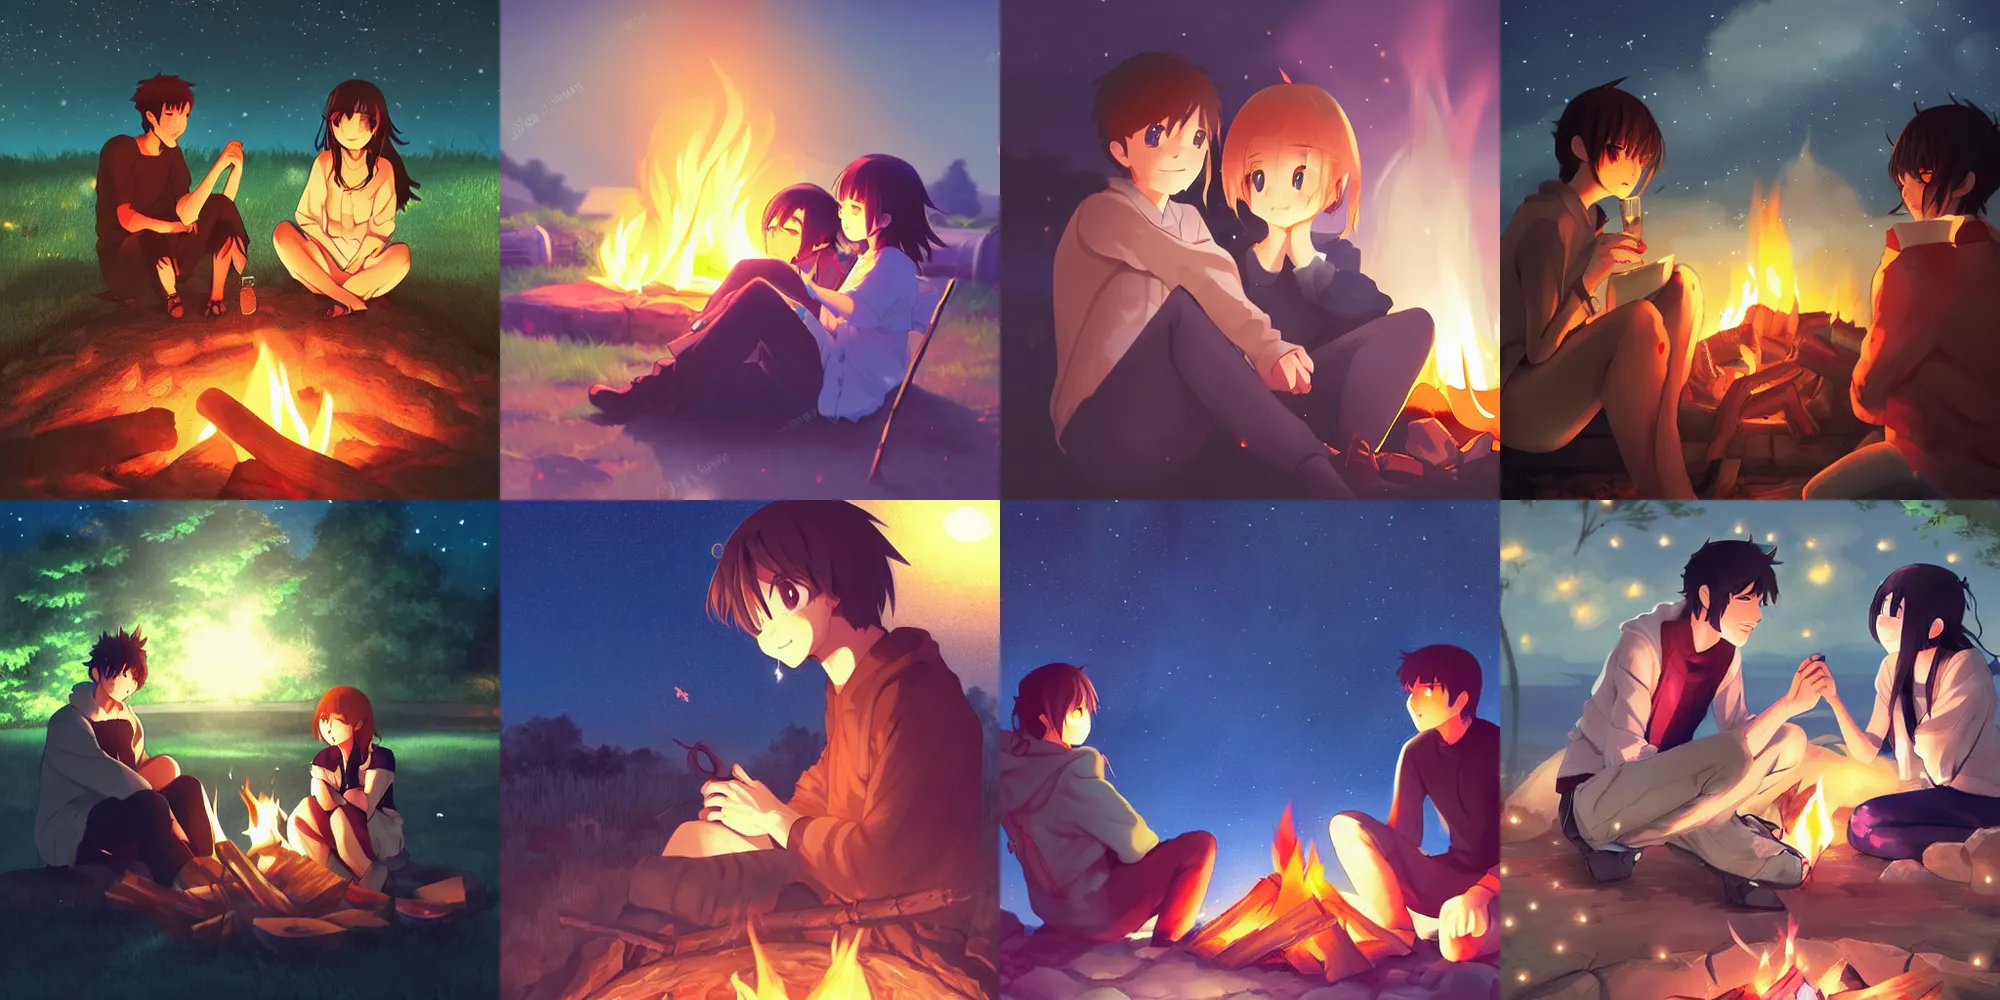 Prompt: very beautiful cute couple sitting nearby a campfire at night, anime, trending on artstation, pixiv, makoto shinkai, manga cover